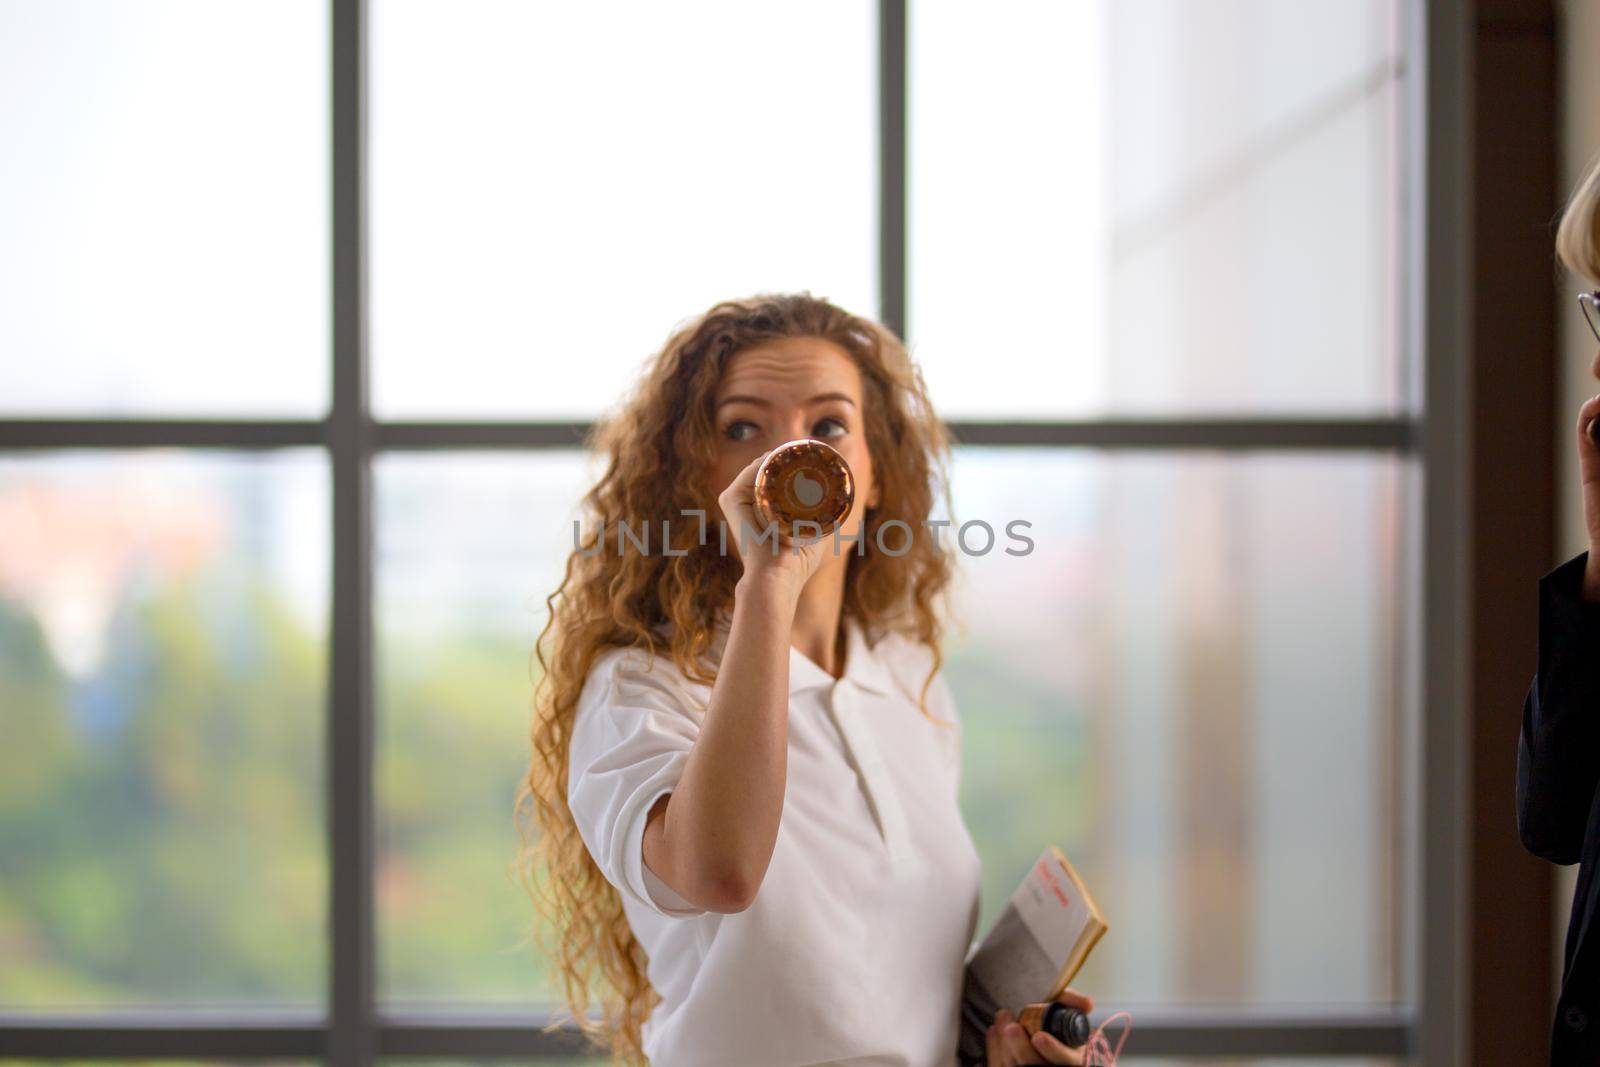 women white shirt with blonde hair drinking water in bottle